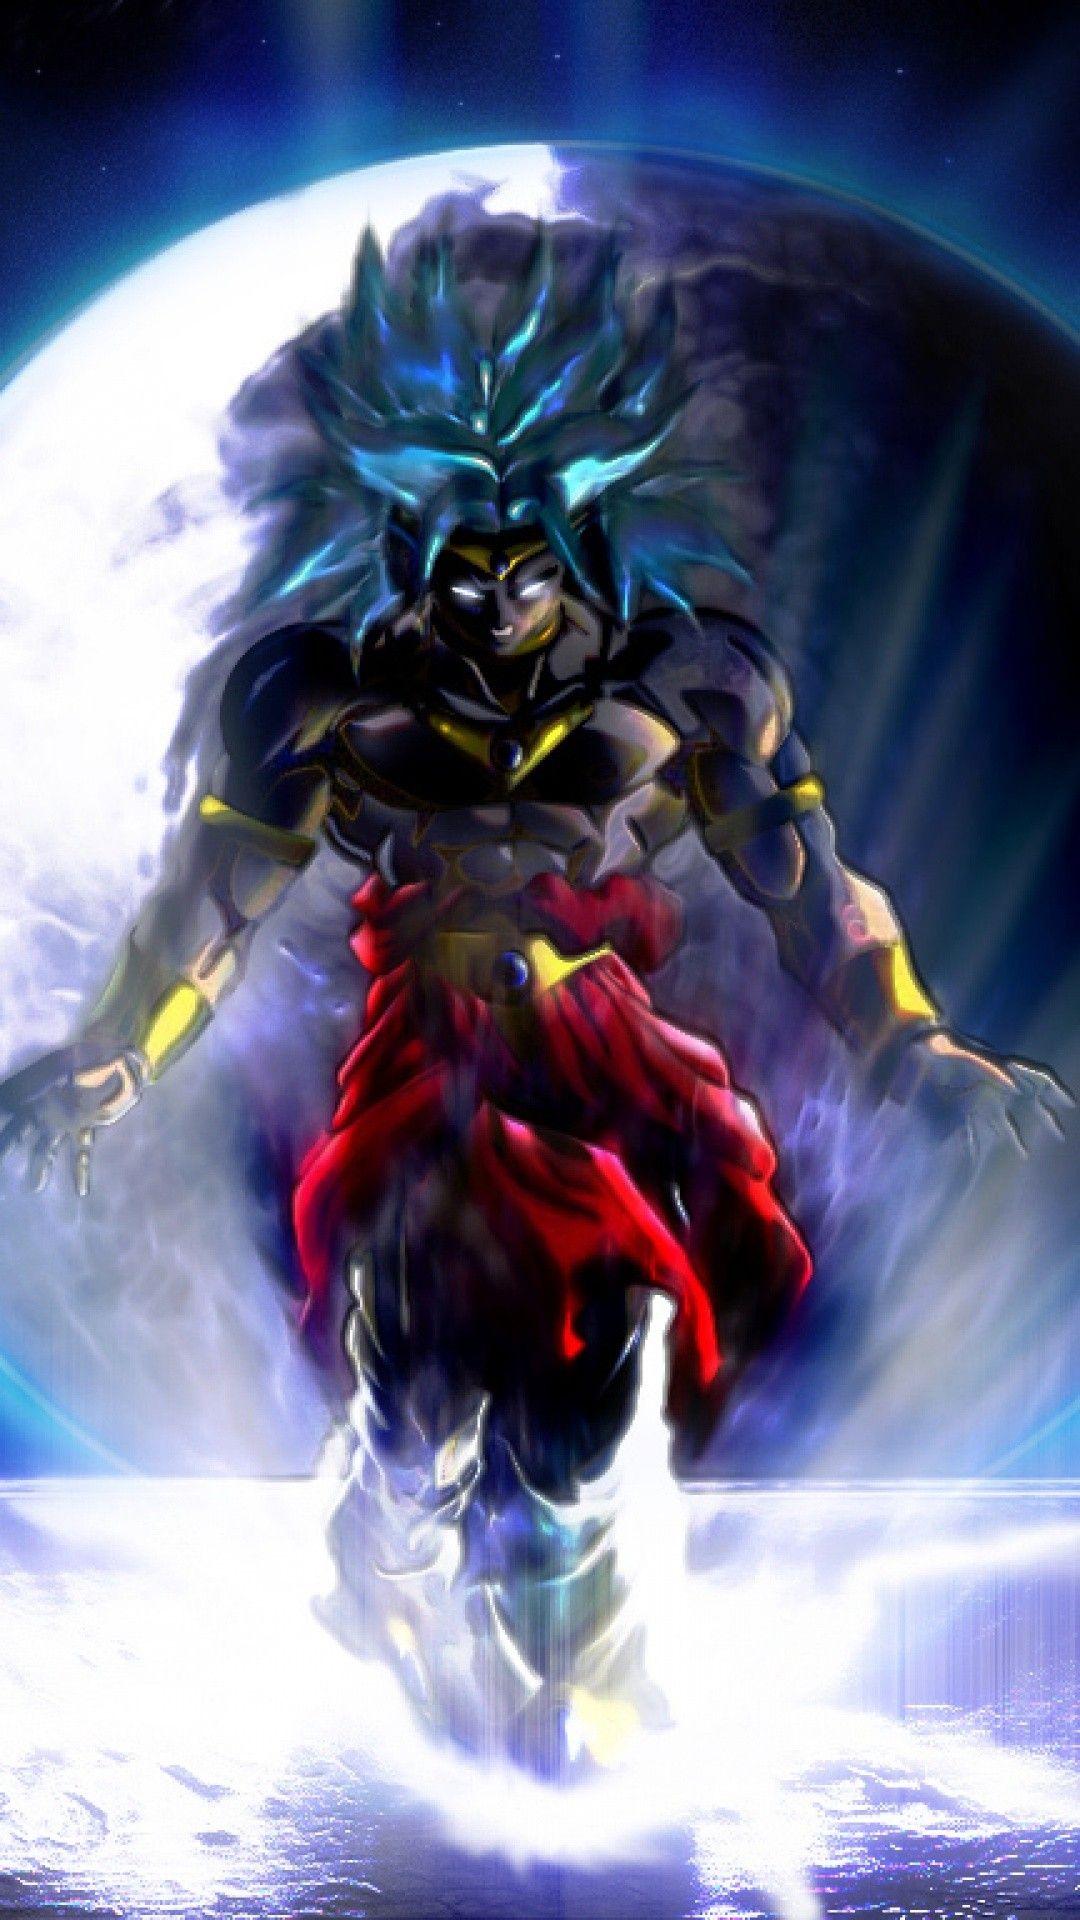 Hydros on X: Dragon Ball Super Card Game: Fusion World 4K PC Wallpaper, 4K  Phone Wallpaper, HD Goku Profile Picture, and HD Vegeta Profile Picture!  #DragonBallSuper  / X